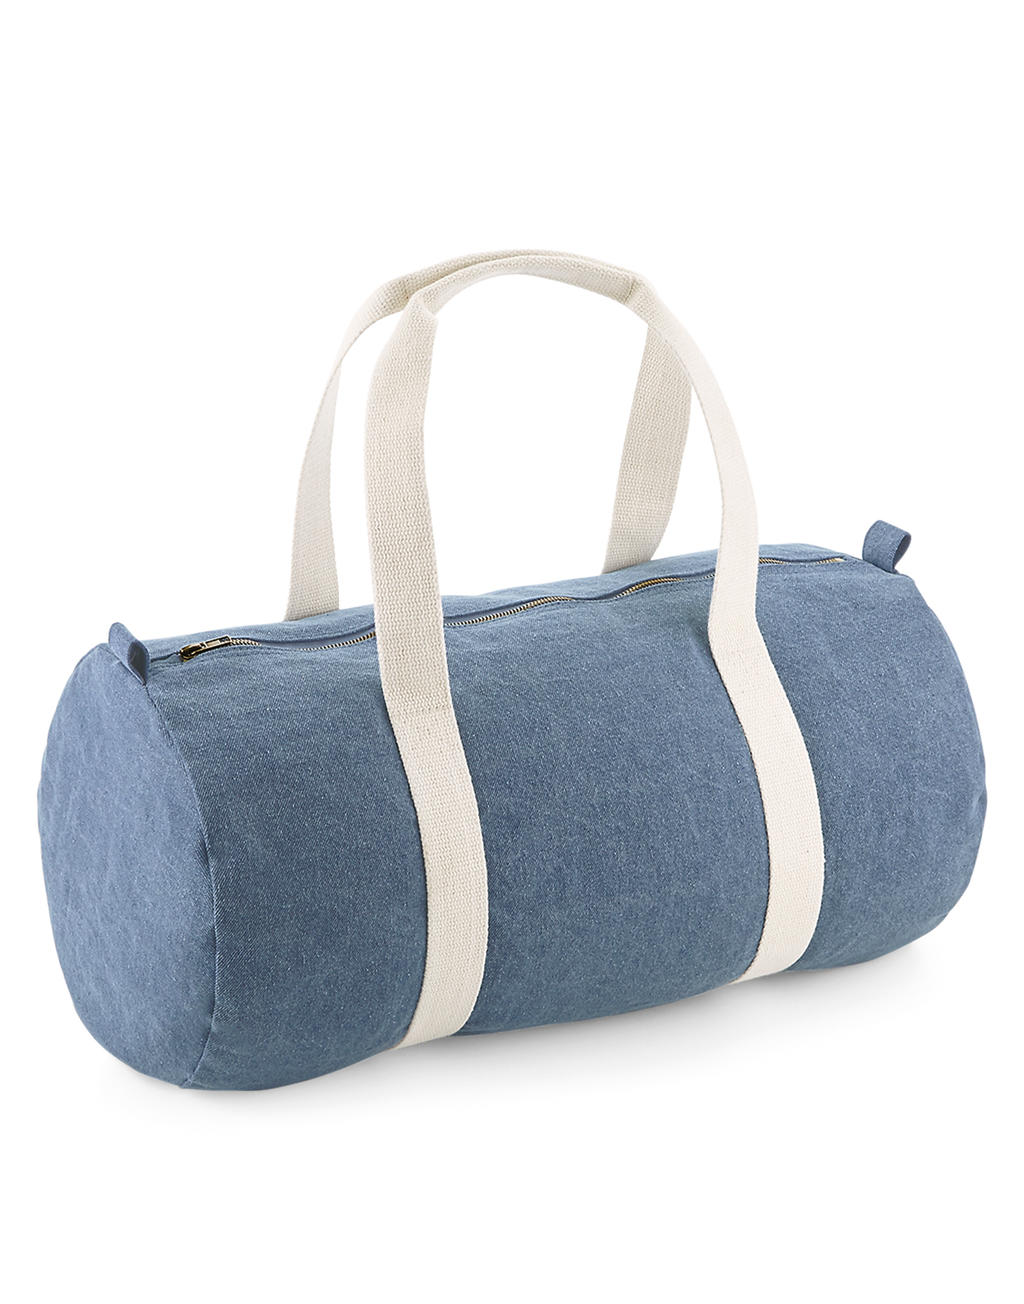  Denim Barrel Bag in Farbe Denim Blue